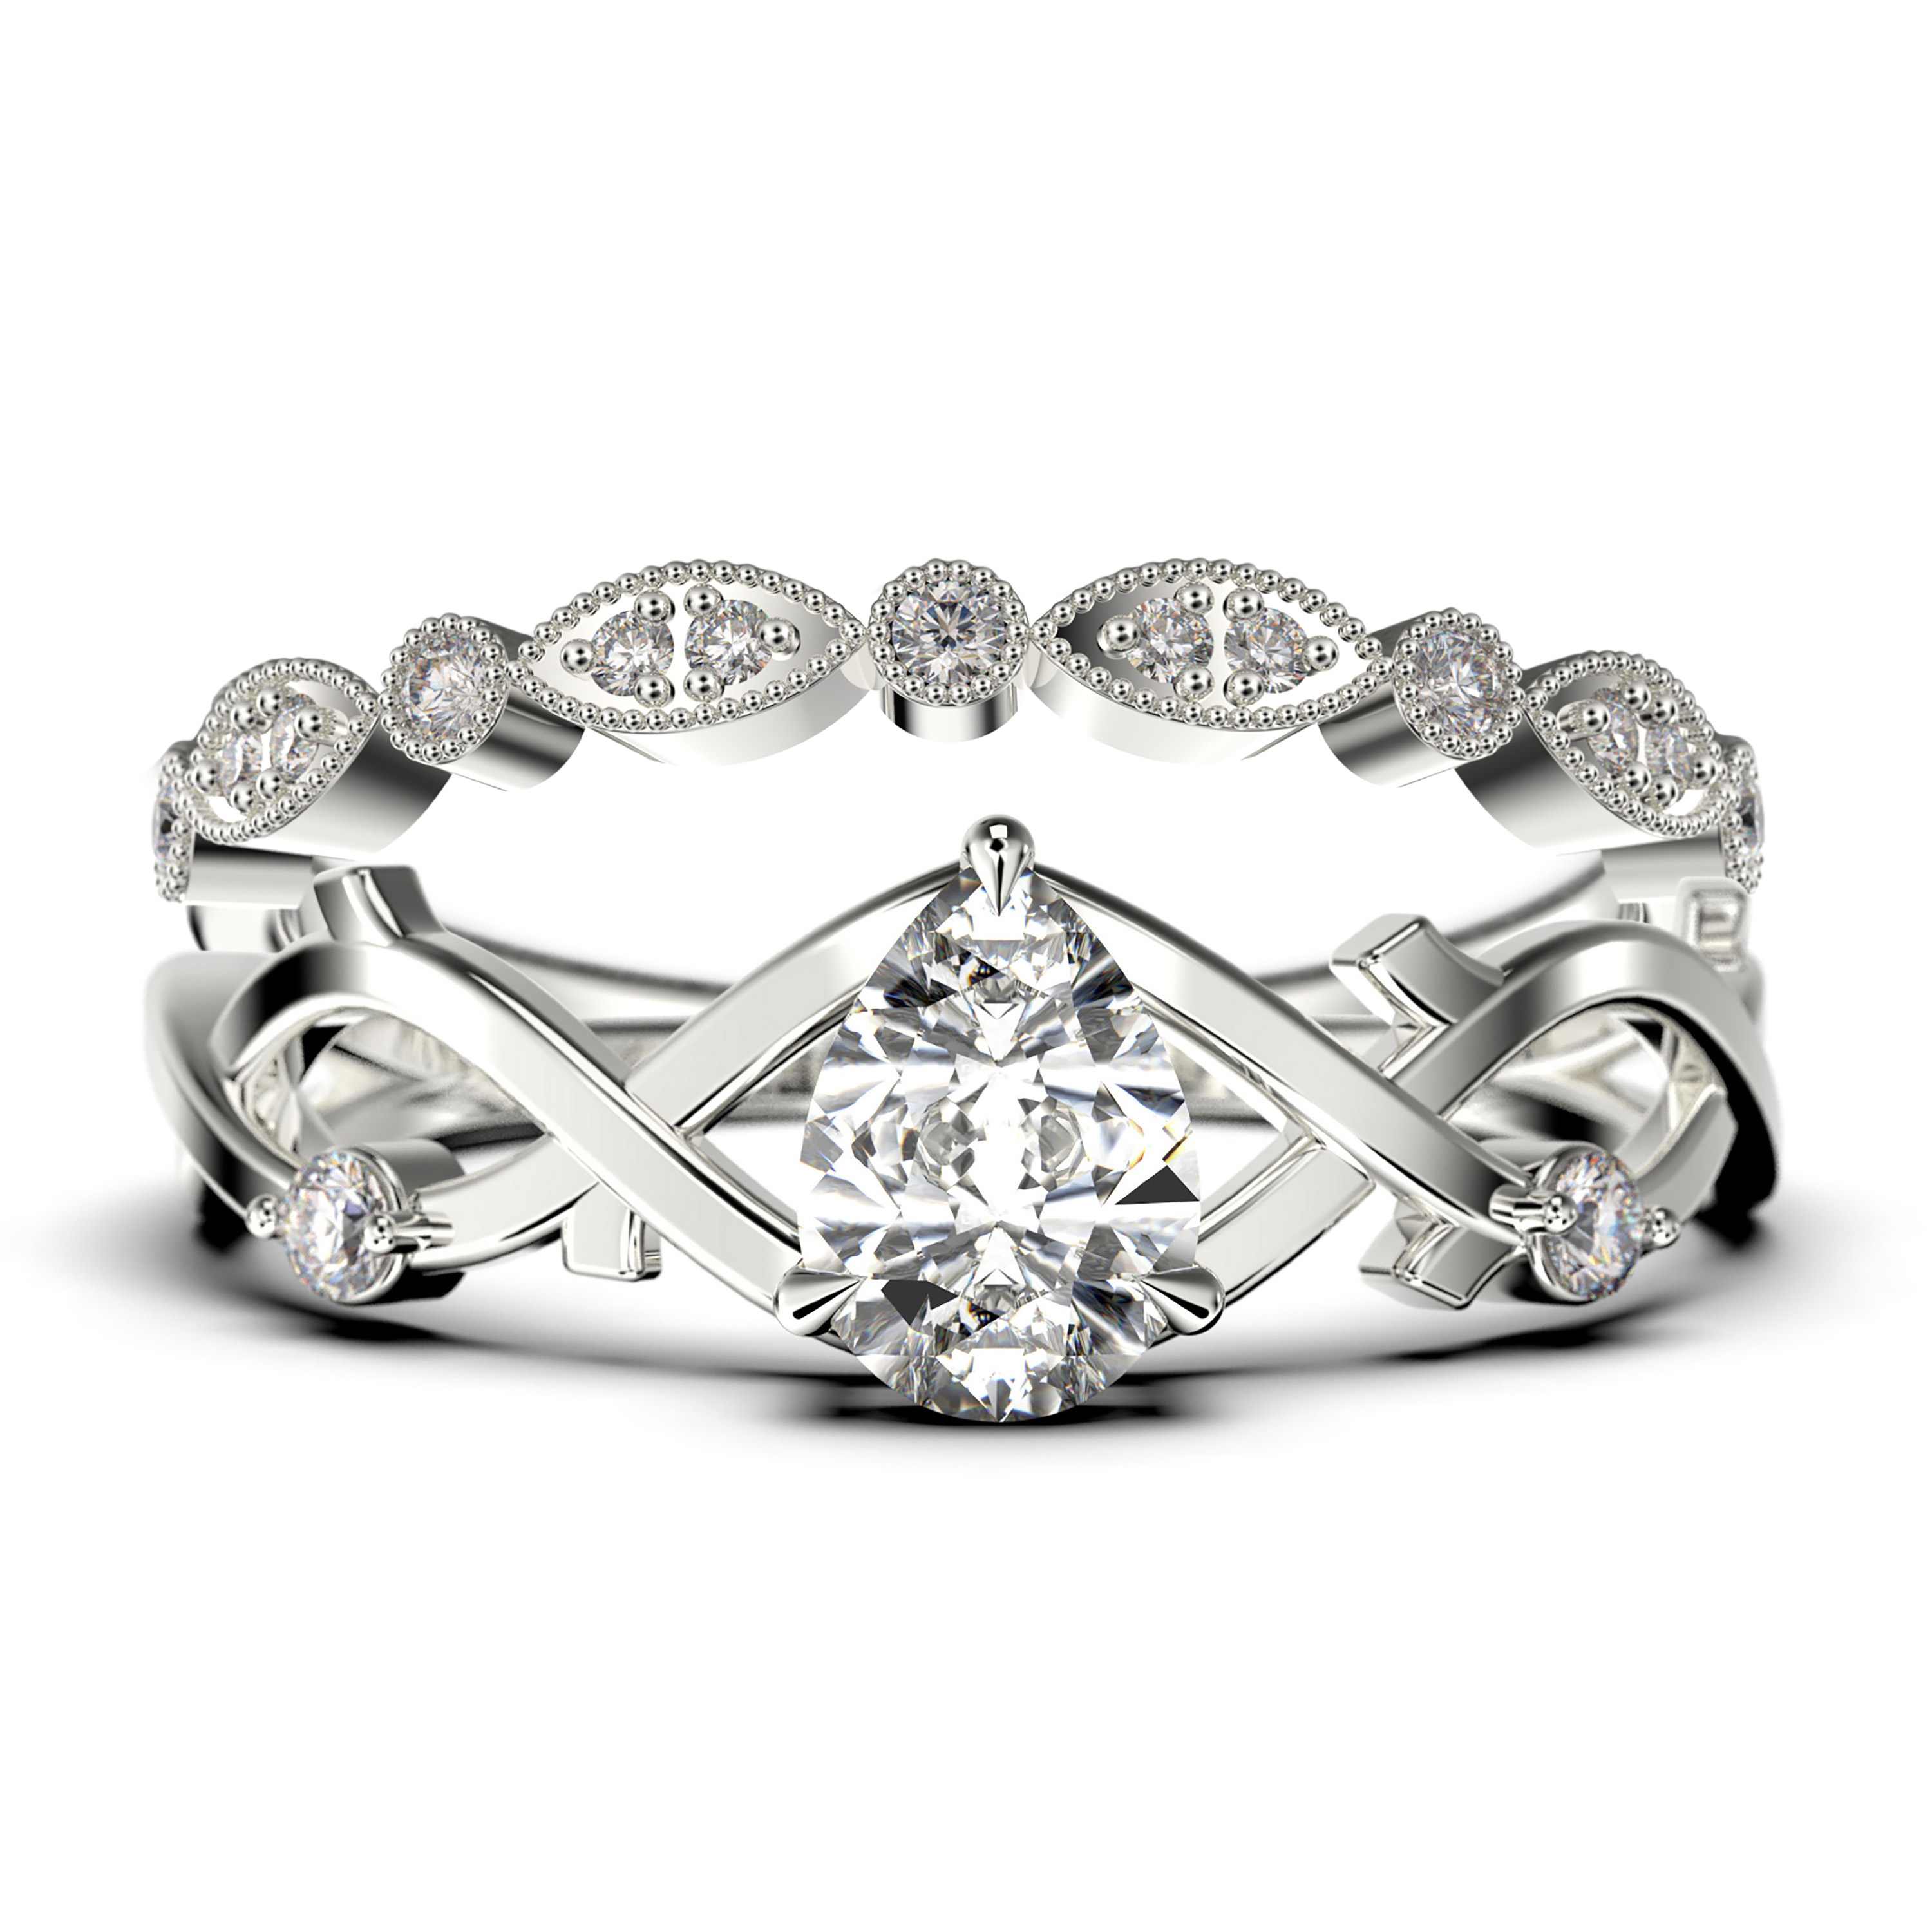 JeenJewels Boho & hippie 1.60 Carat Pear Cut Diamond Moissanite Unique Engagement Ring in 10k Solid White Gold, Bridal Set